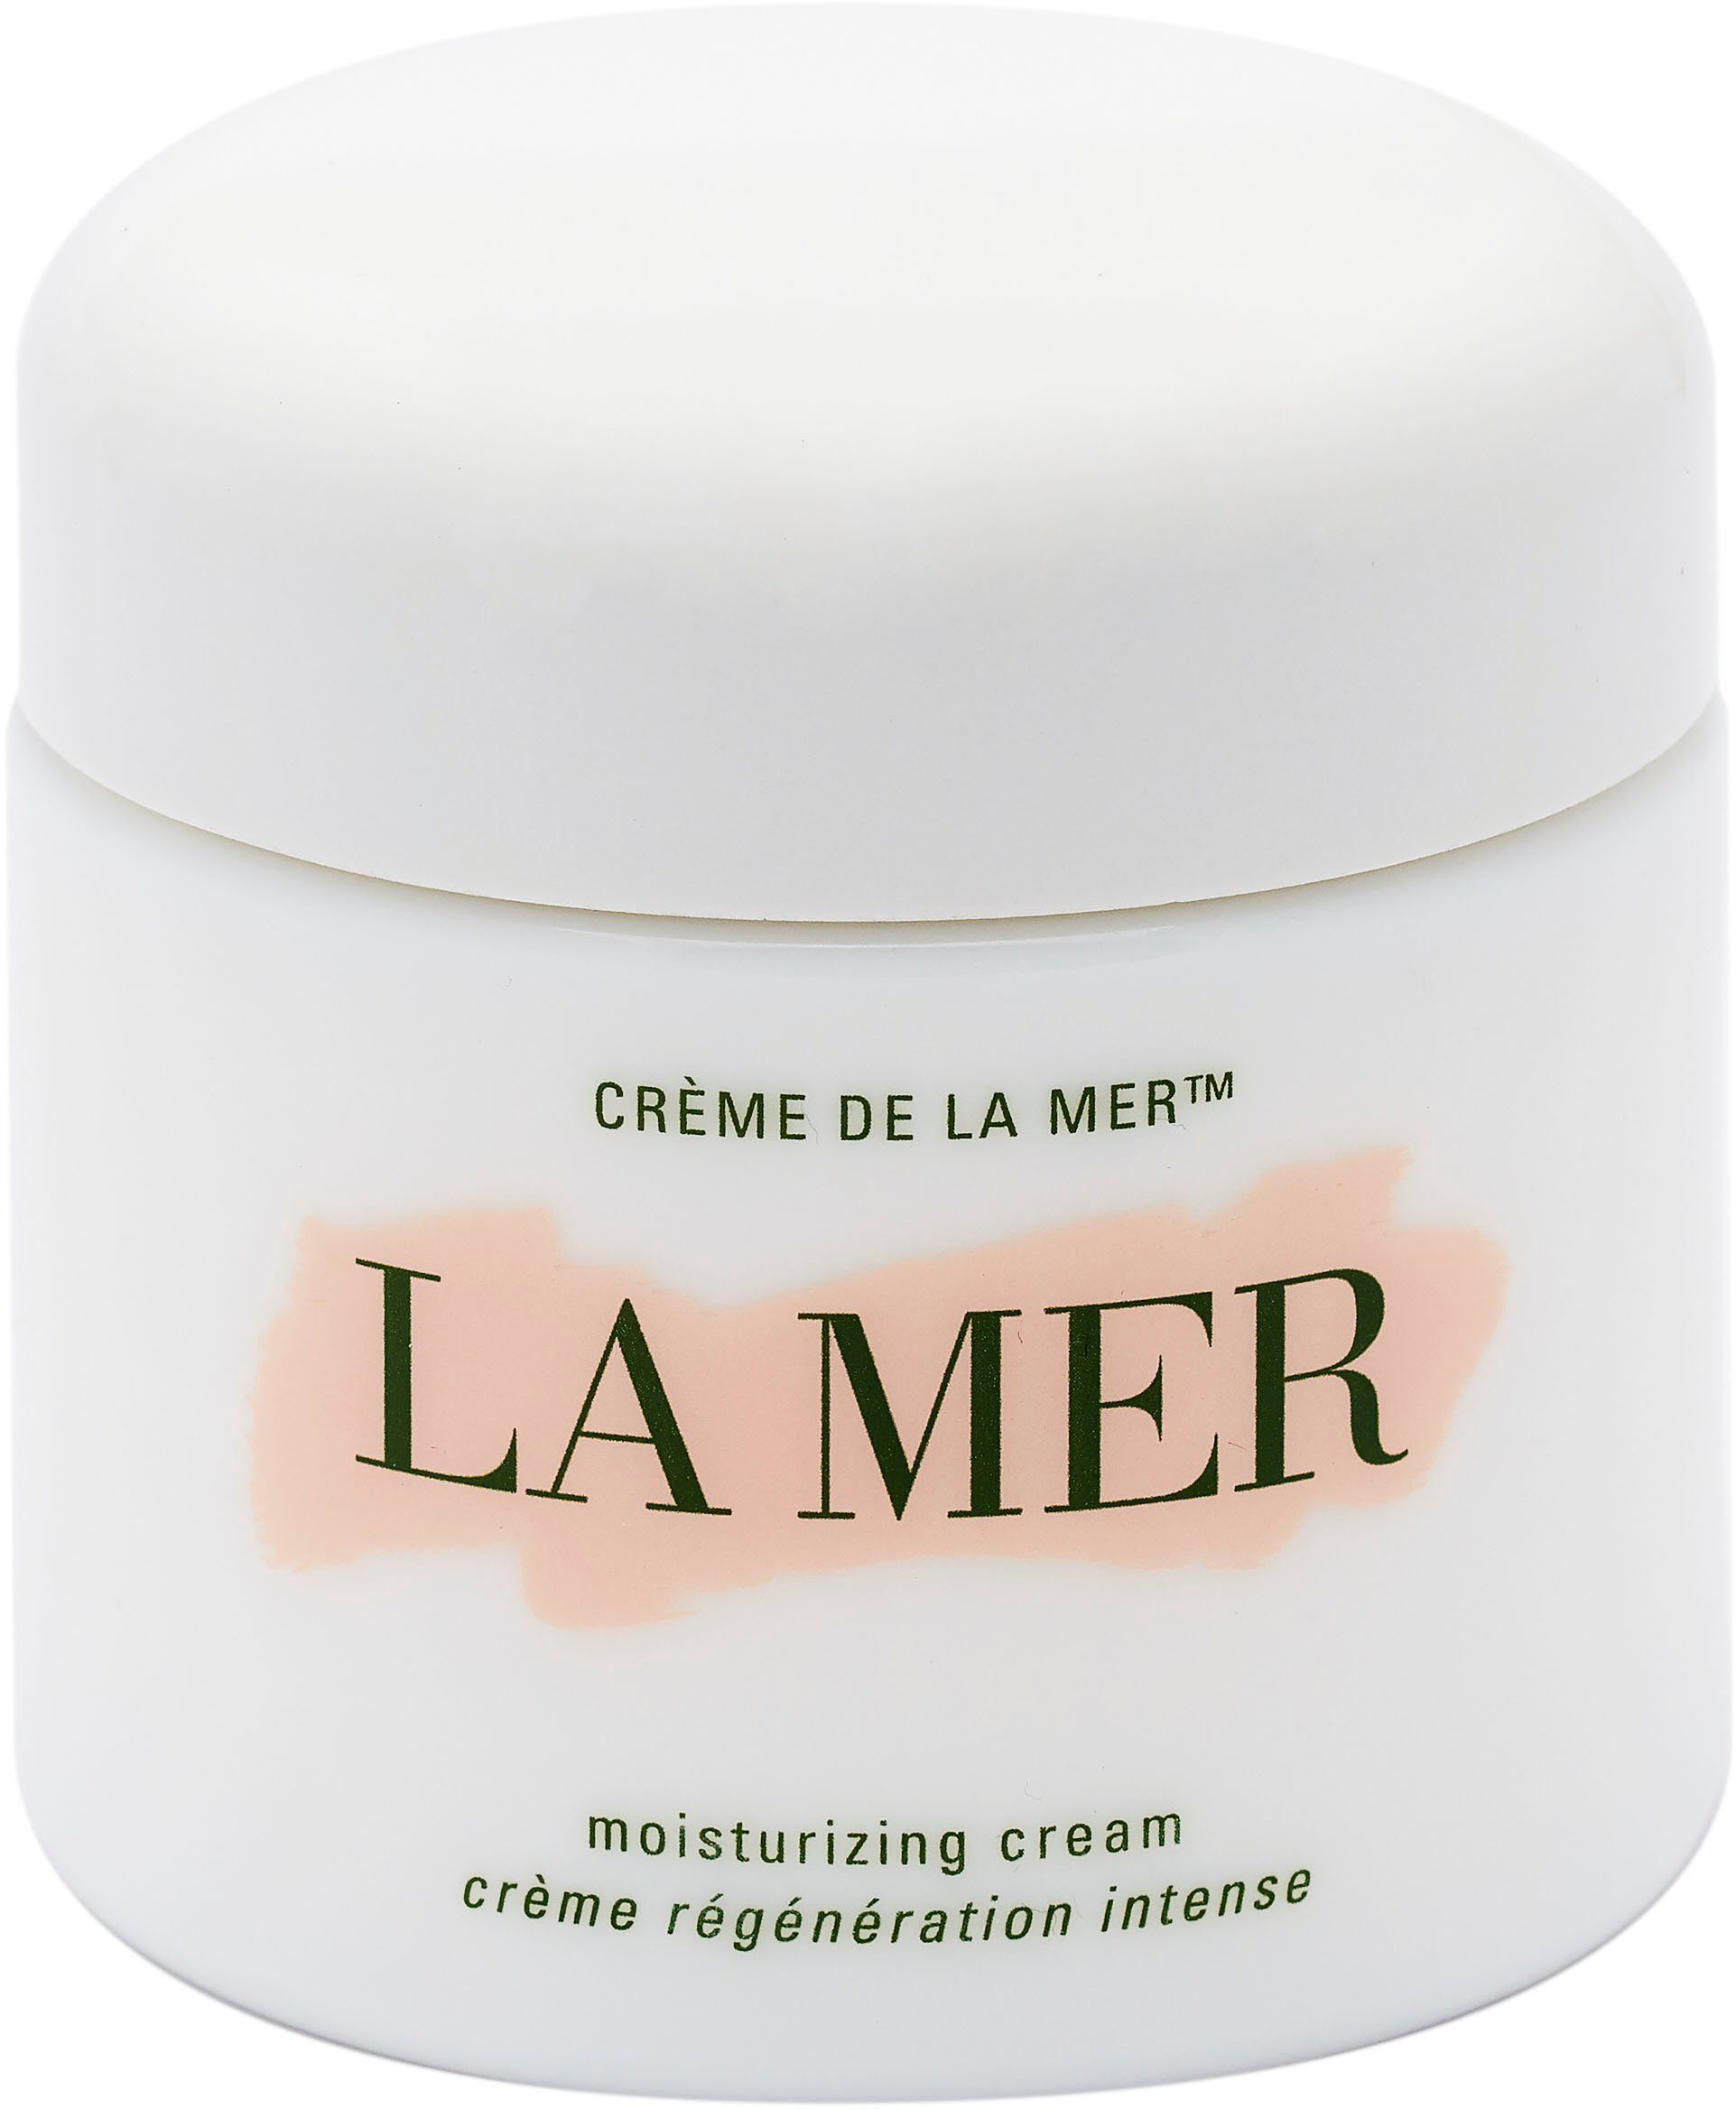 LA MER cream Feuchtigkeitscreme The moisturizing